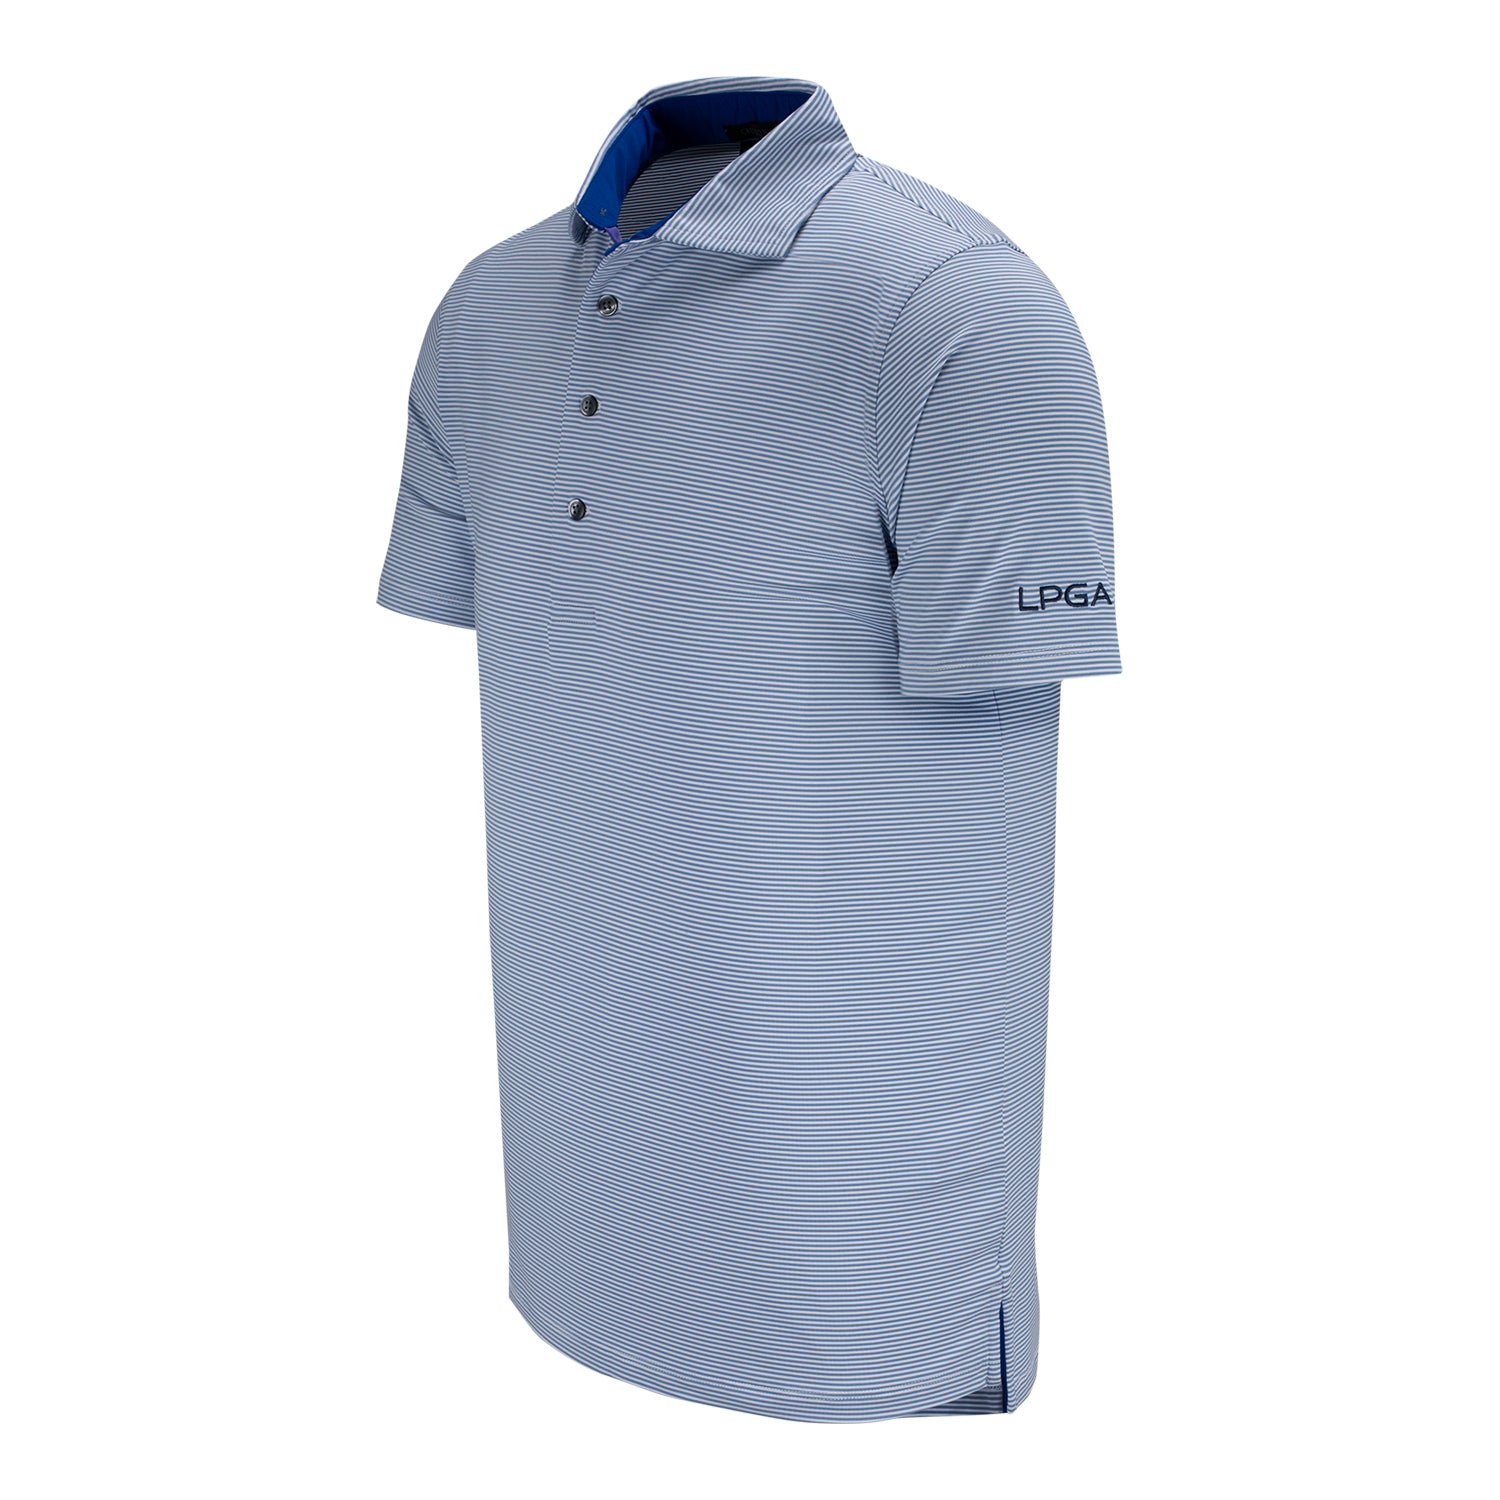 Greyson Clothiers LPGA Men's Saranac Golf Polo - Angled Left Side View